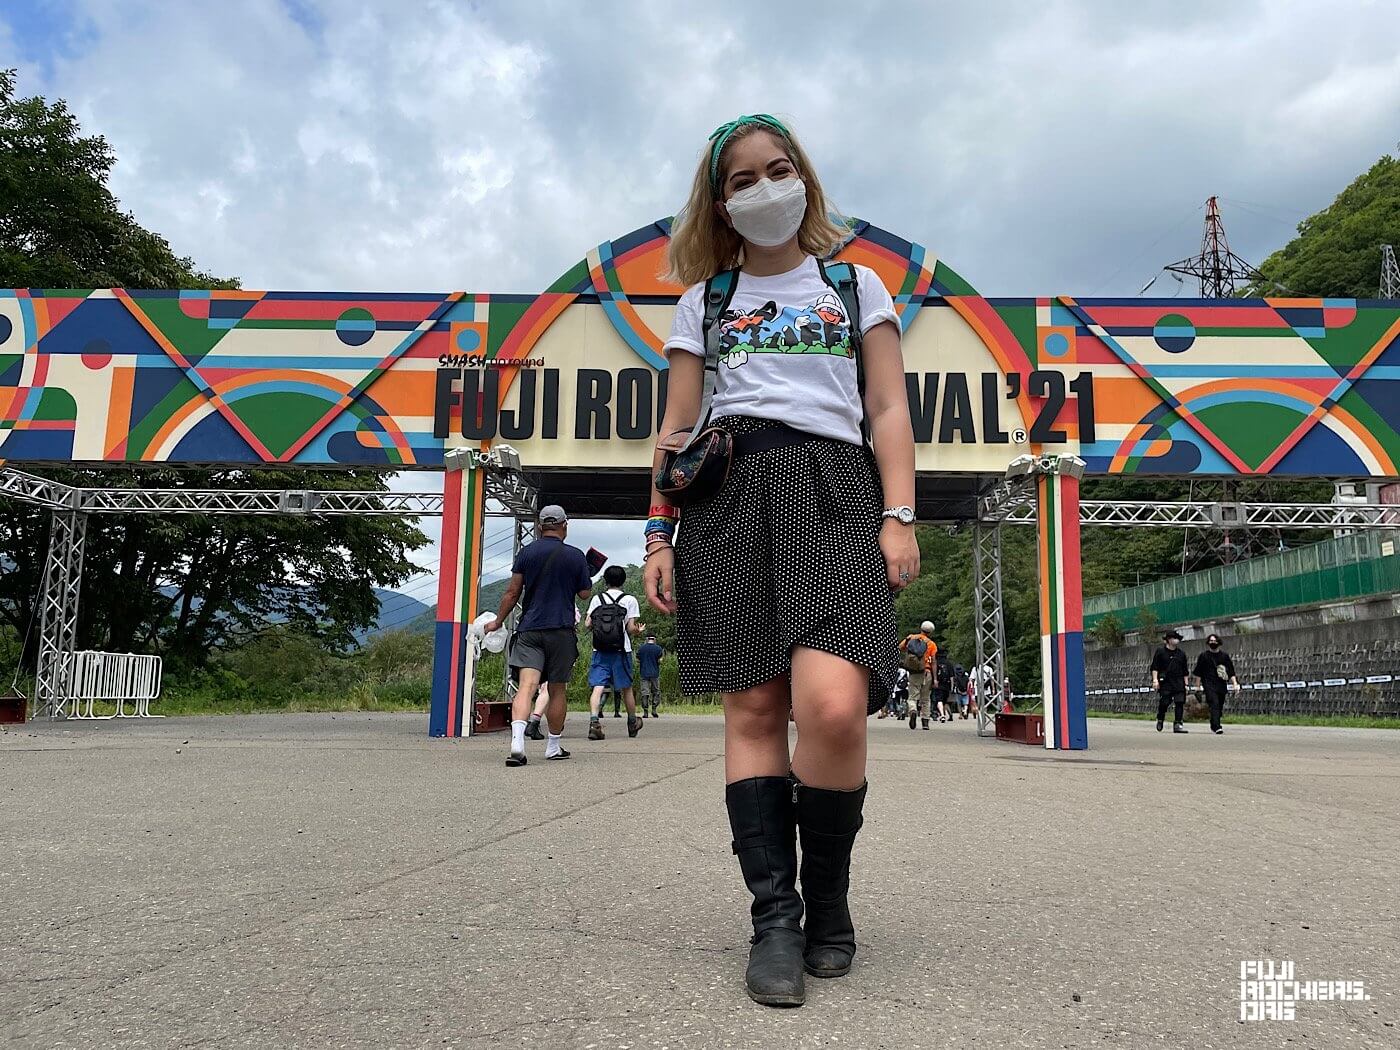 Festival Fashion: How to Dress for Fuji Rock